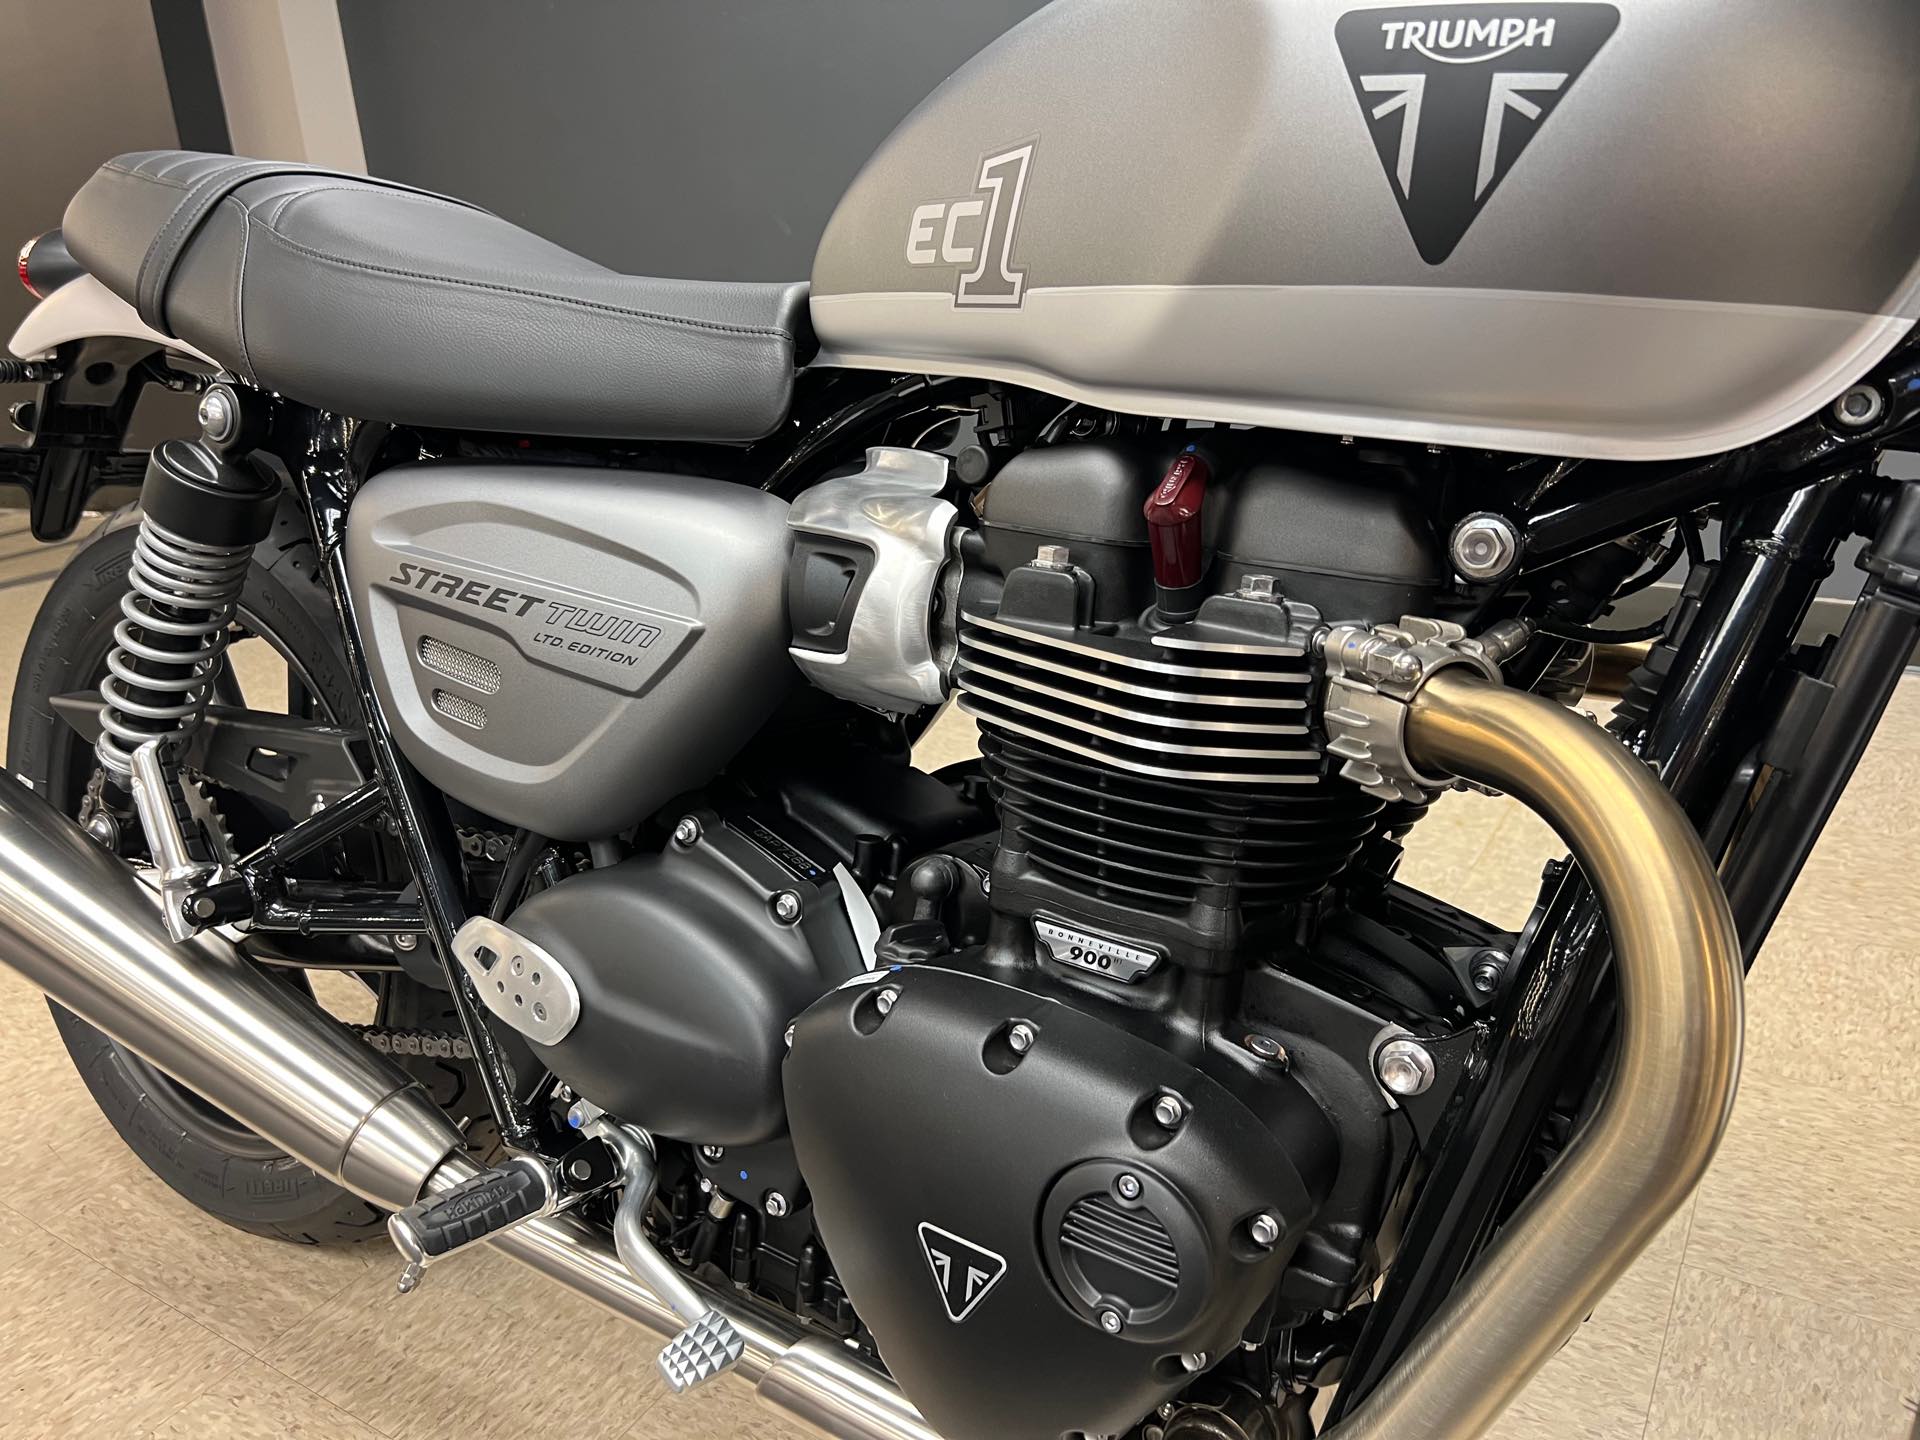 2022 Triumph Street Twin EC1 at Sloans Motorcycle ATV, Murfreesboro, TN, 37129